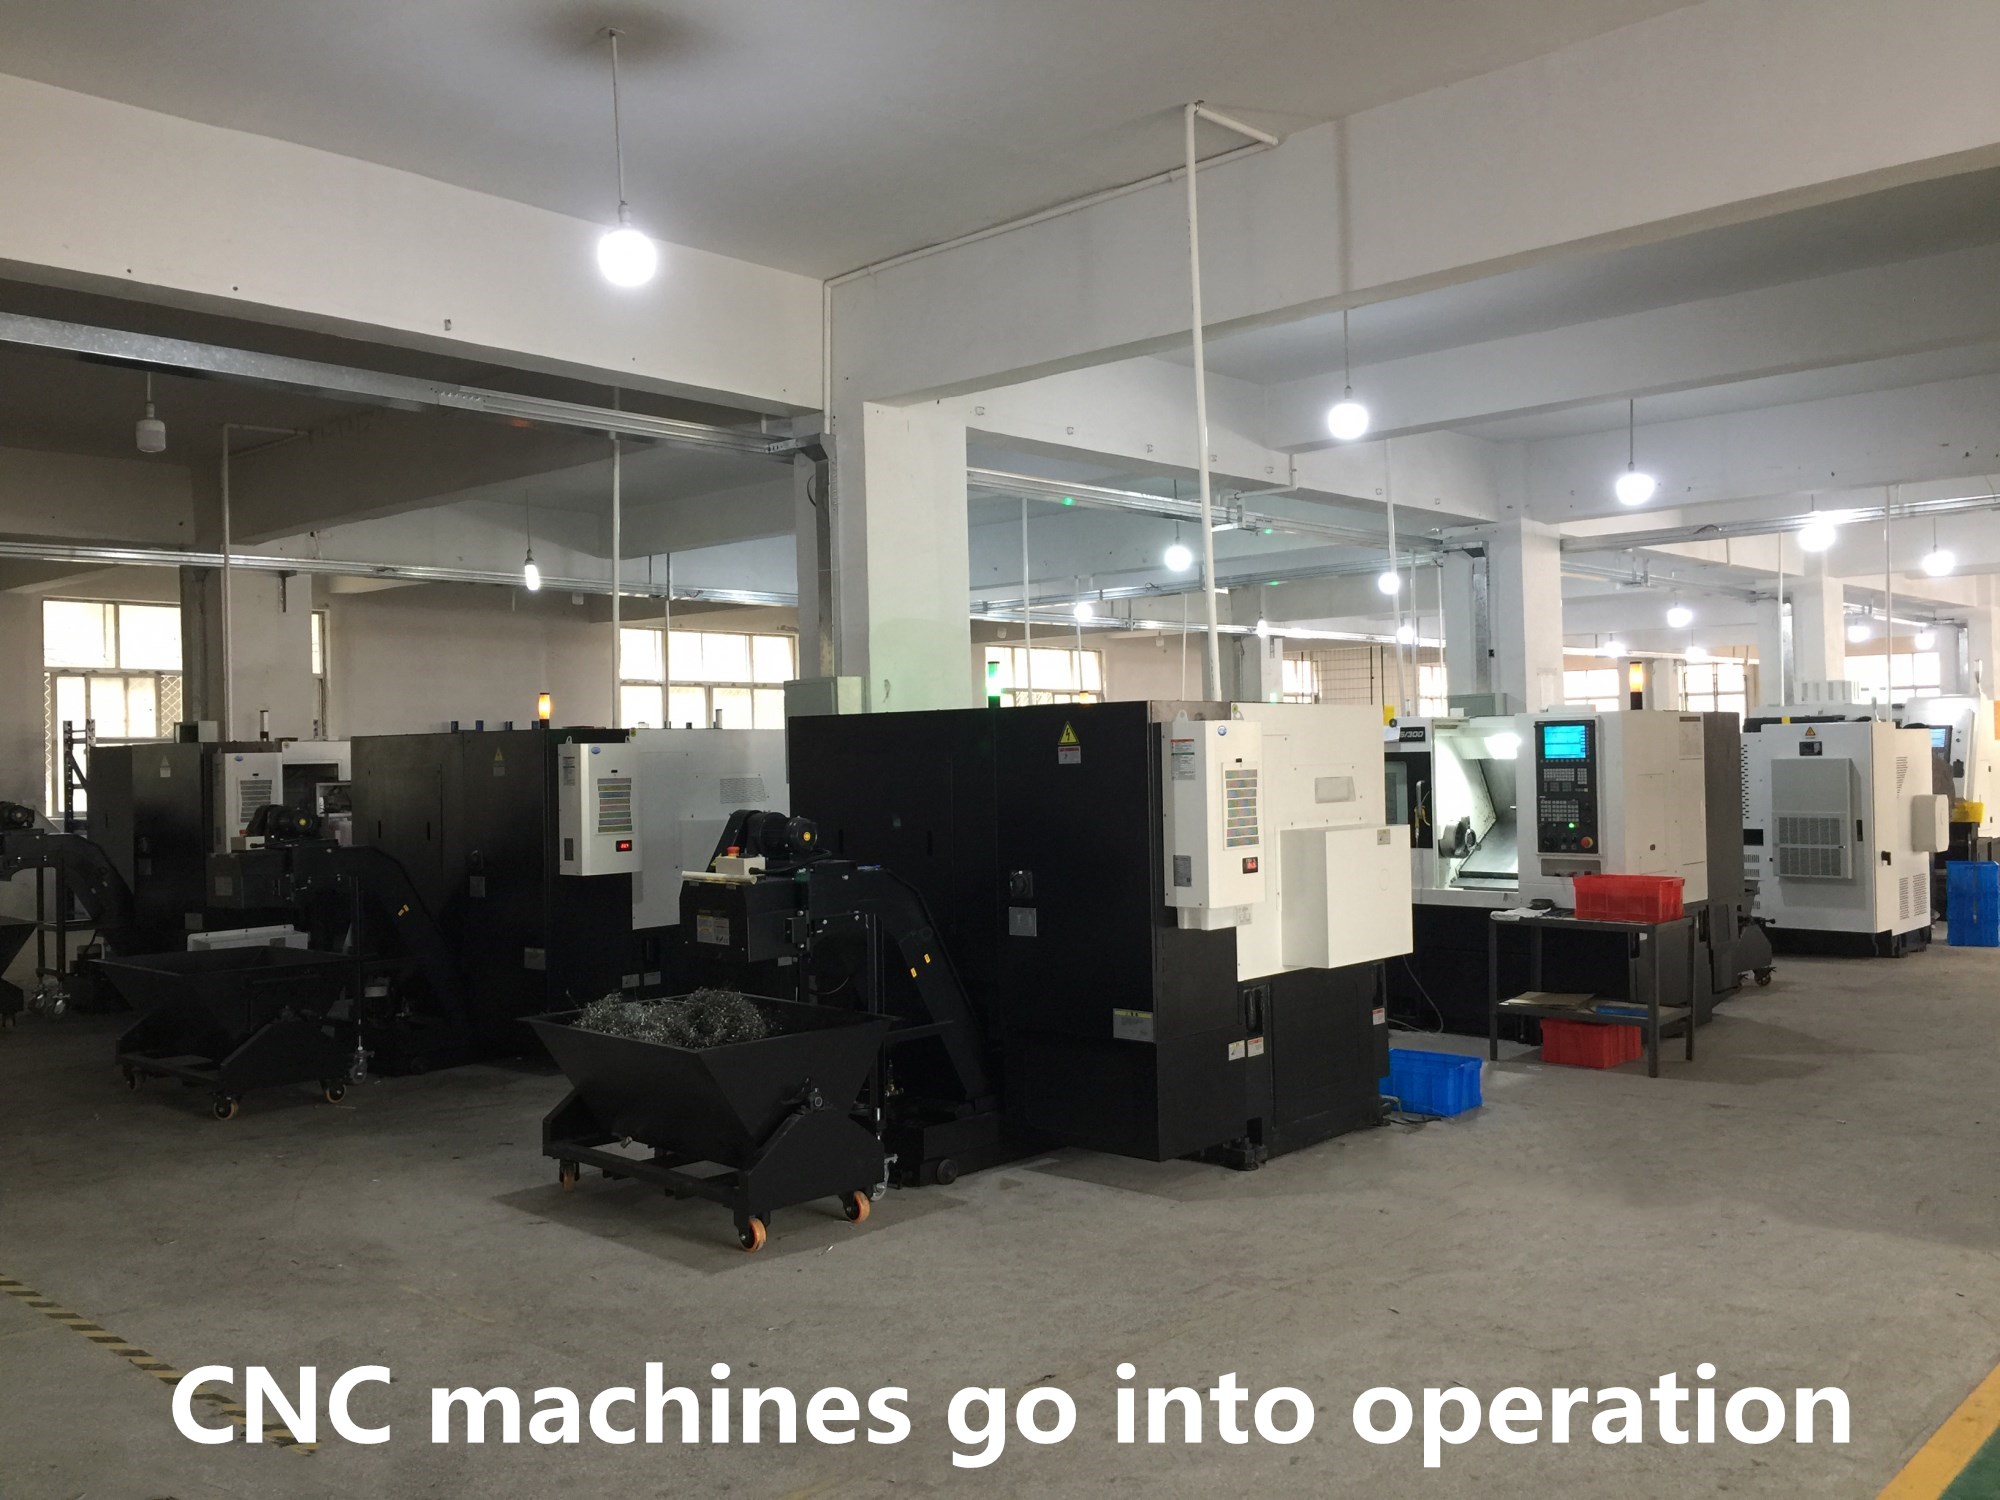 Big News!QILI Imported 40PCS High Precision CNC Machines